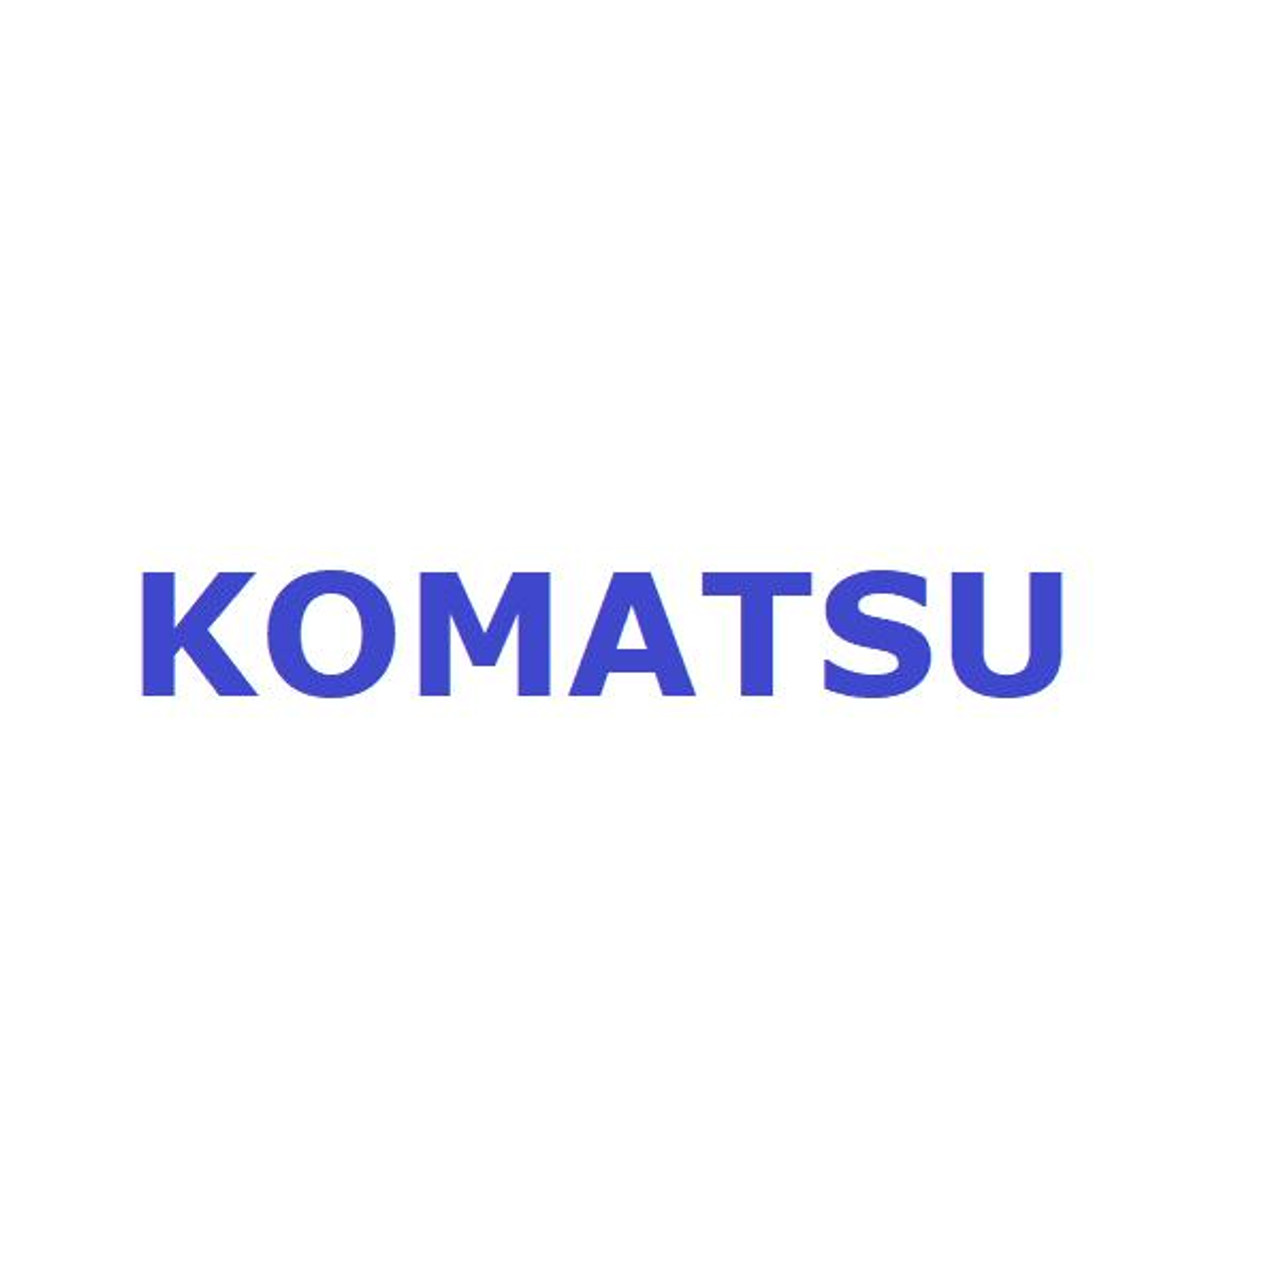 Komatsu Seal # 3EC-64-05010L